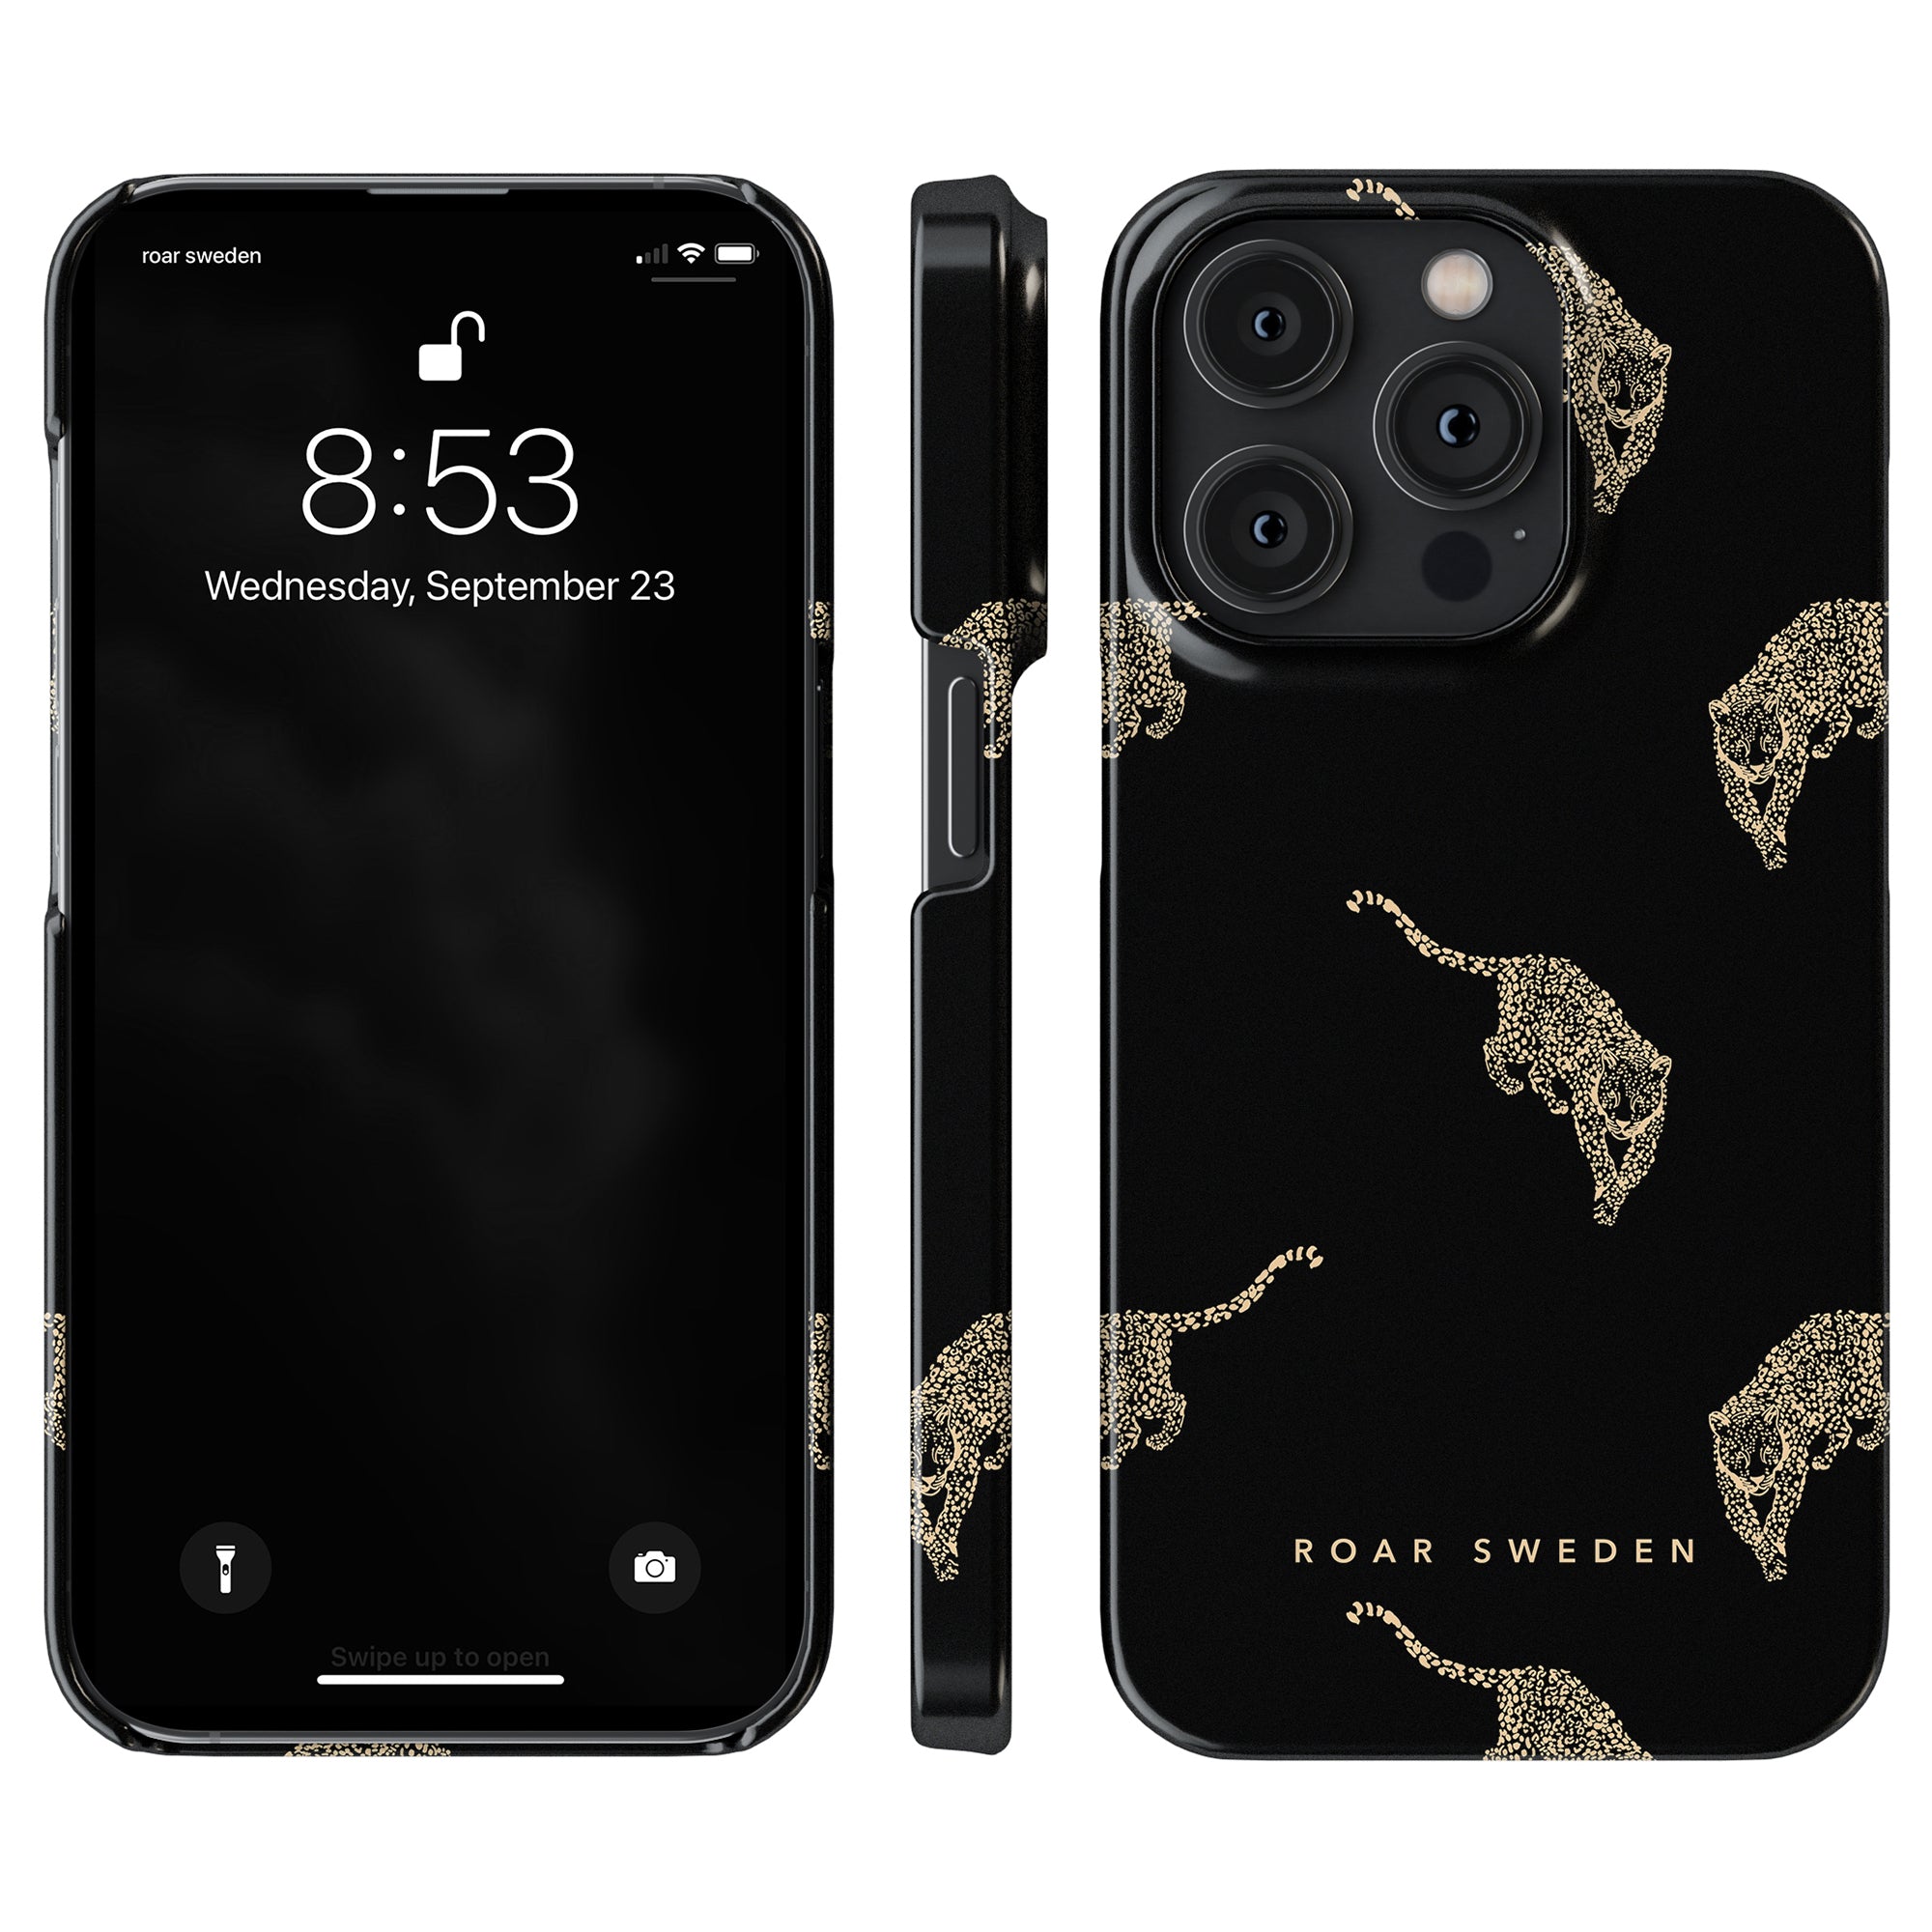 An elegant Kitty Black - Slim smartphone case adorned with a leopard print design.